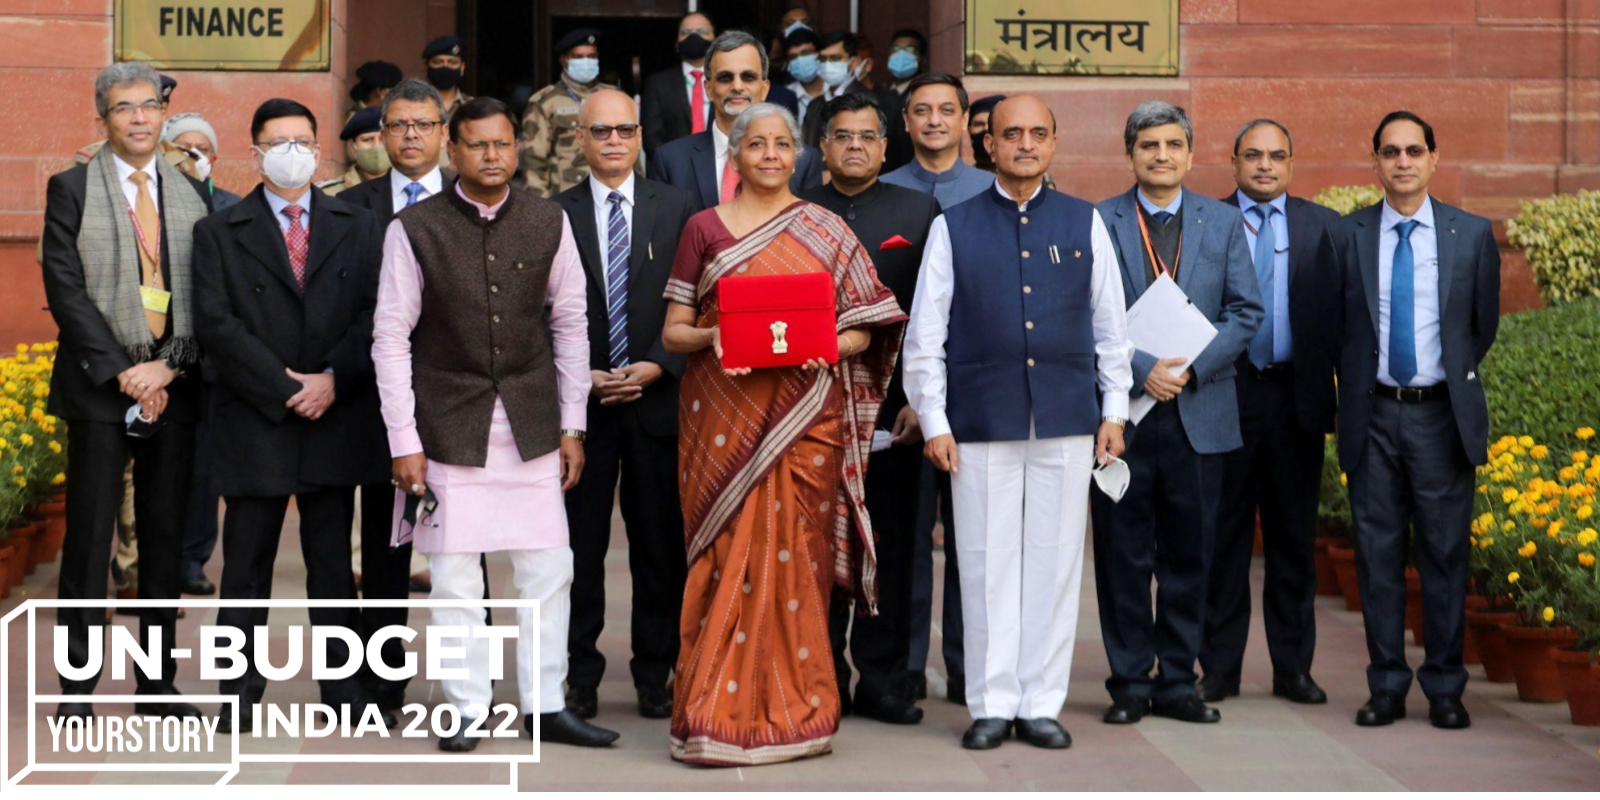 Budget 2022 sets the tone for India's 'Amrit Kaal', says FM Nirmala Sitharaman